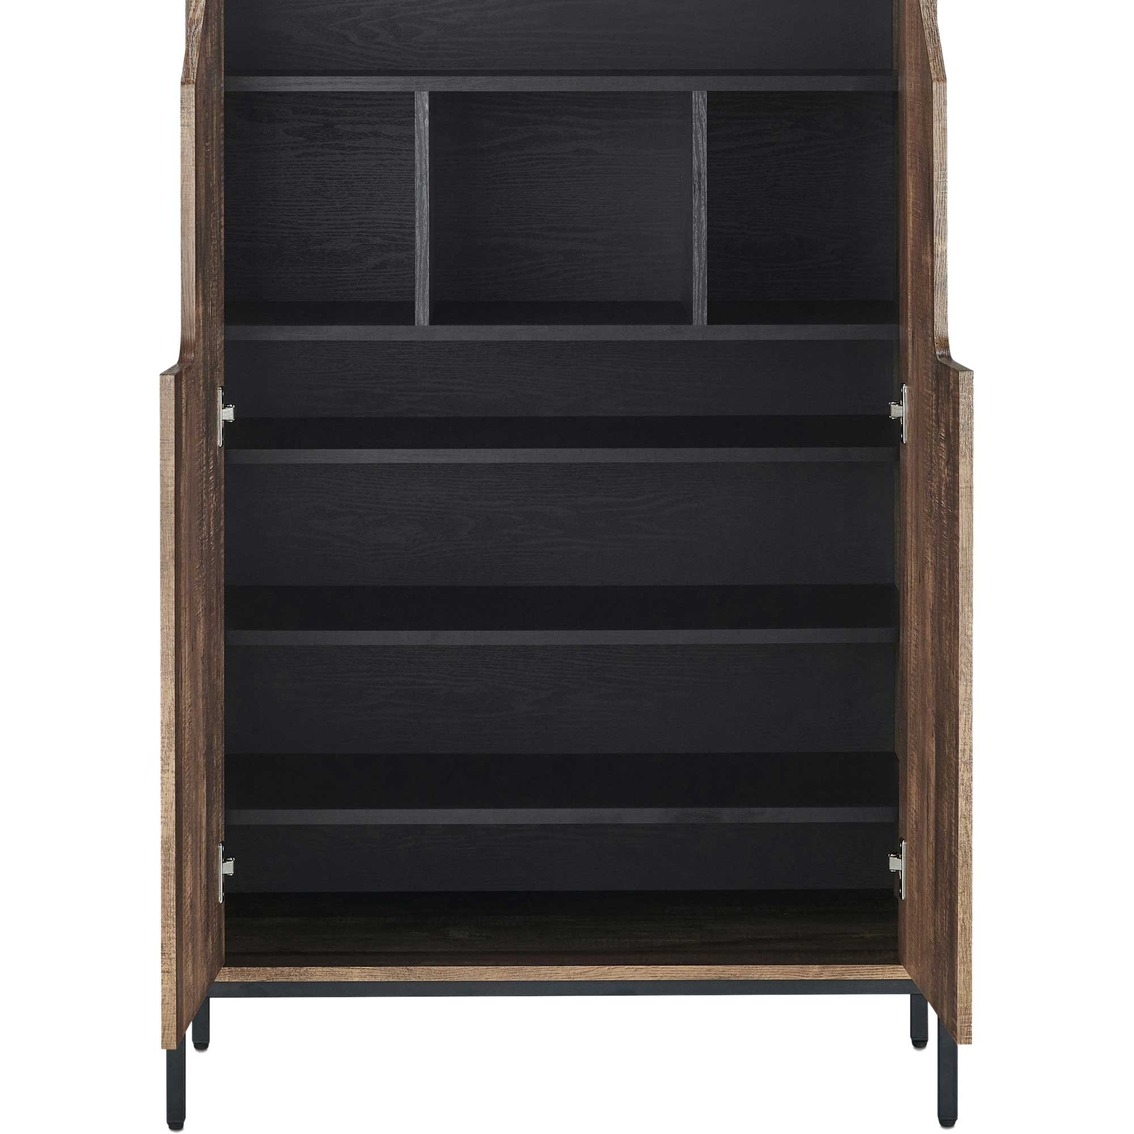 Furniture of America McCarran Rustic Wood 8 Shelf Shoe Cabinet - Image 2 of 2